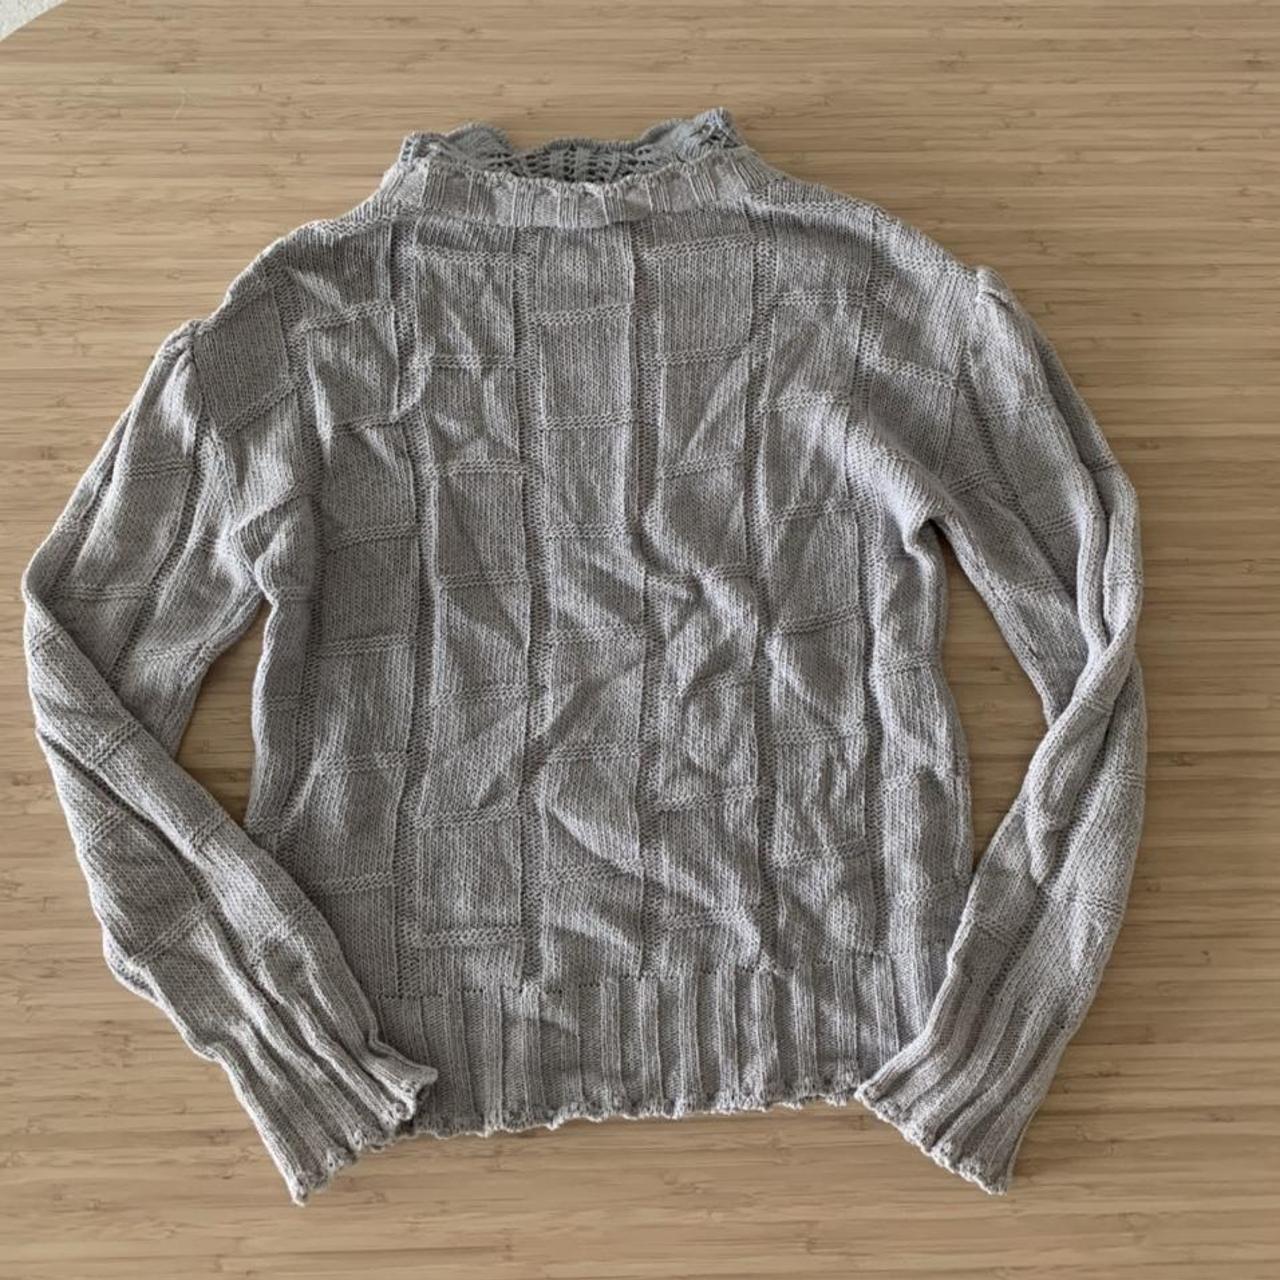 Vintage Vivienne Westwood Knit Sweater. Absolutely... - Depop